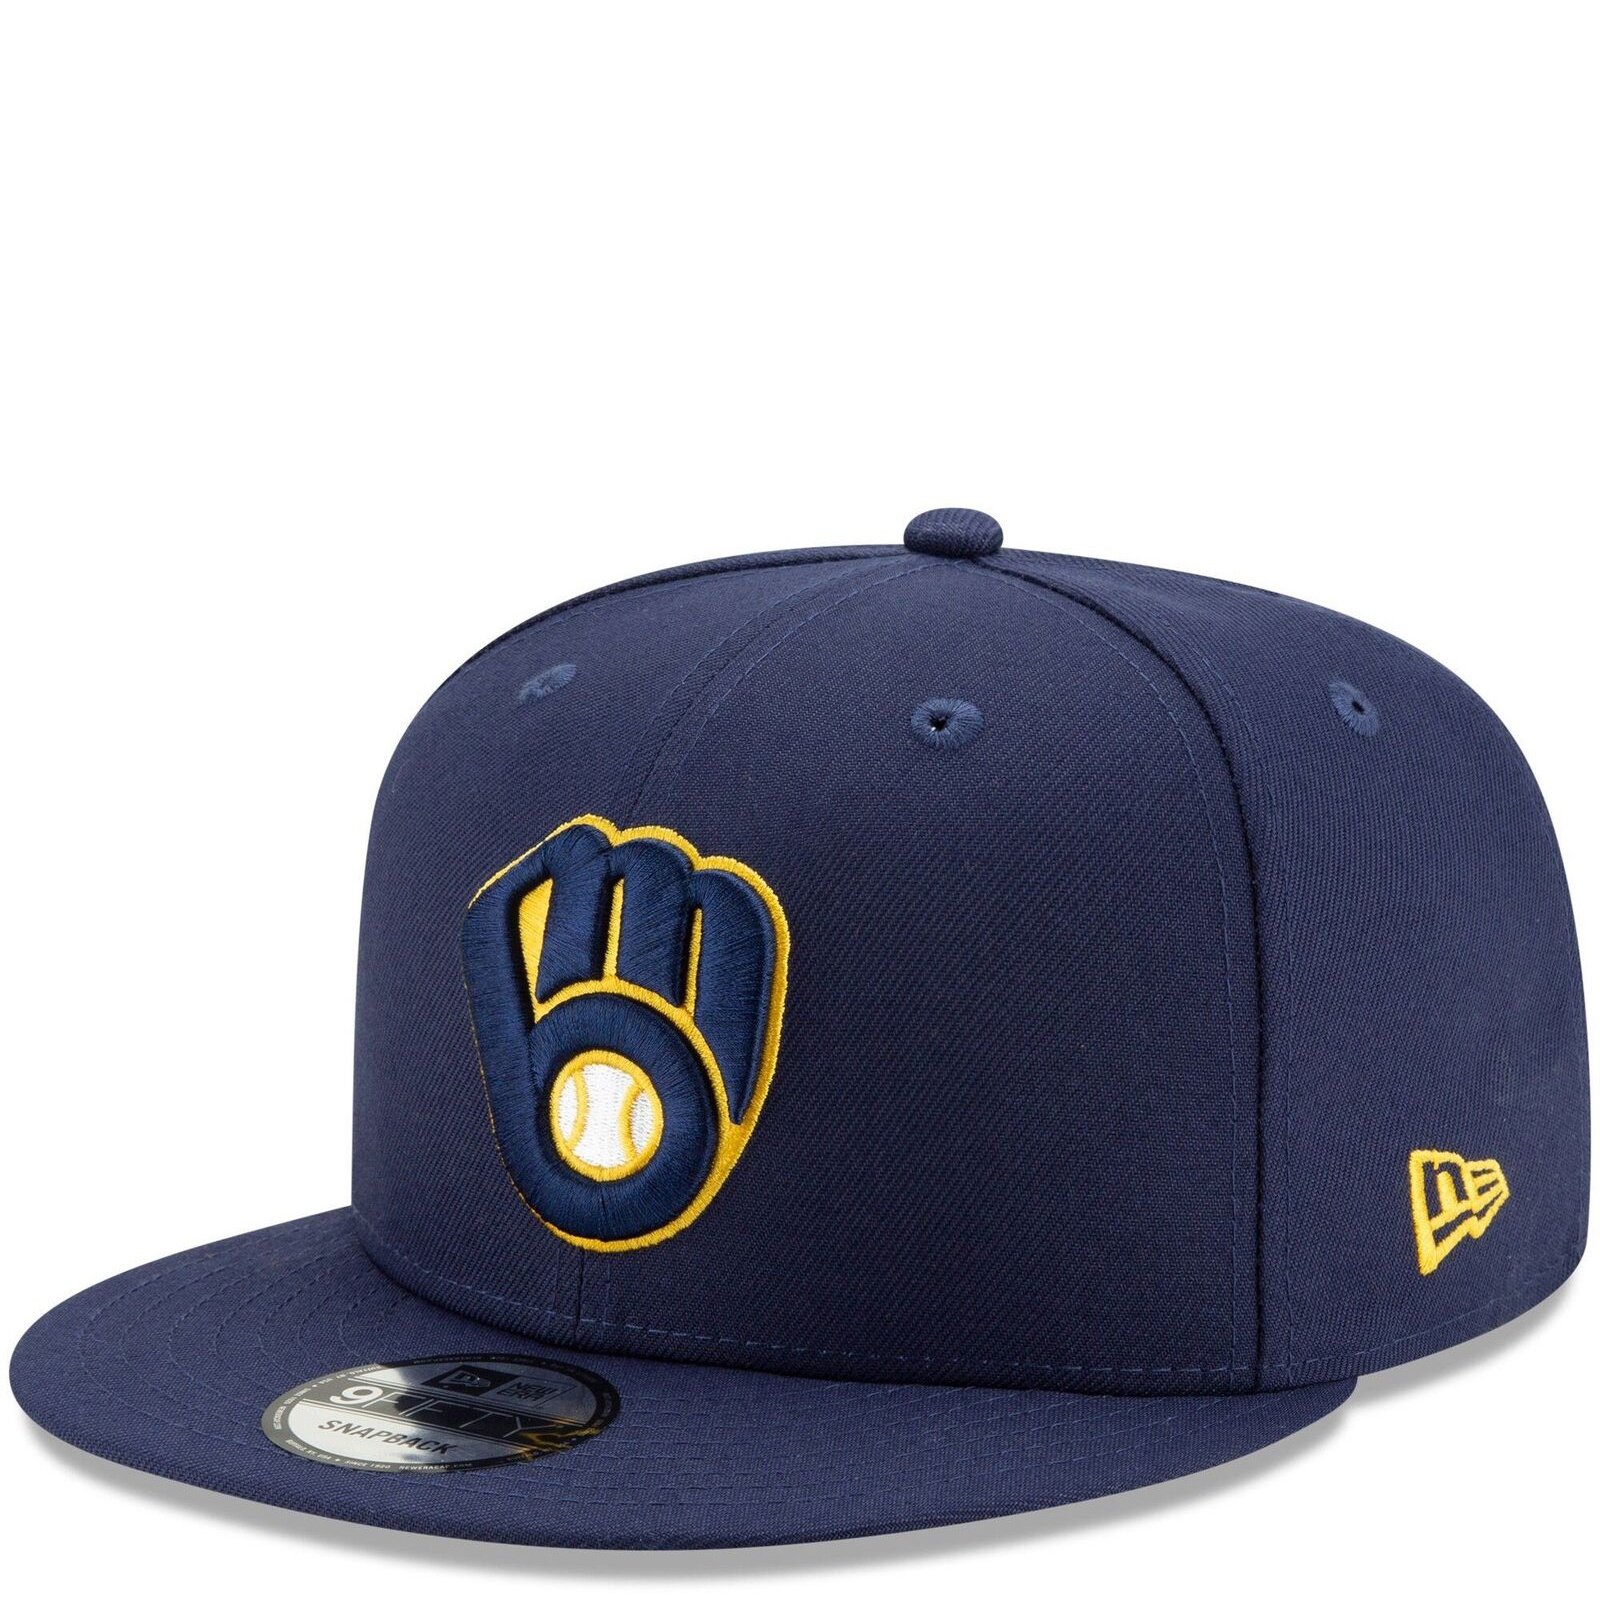 New Era Milwaukee Brewers '20 Basic 9Fifty Snapback Hat - Navy